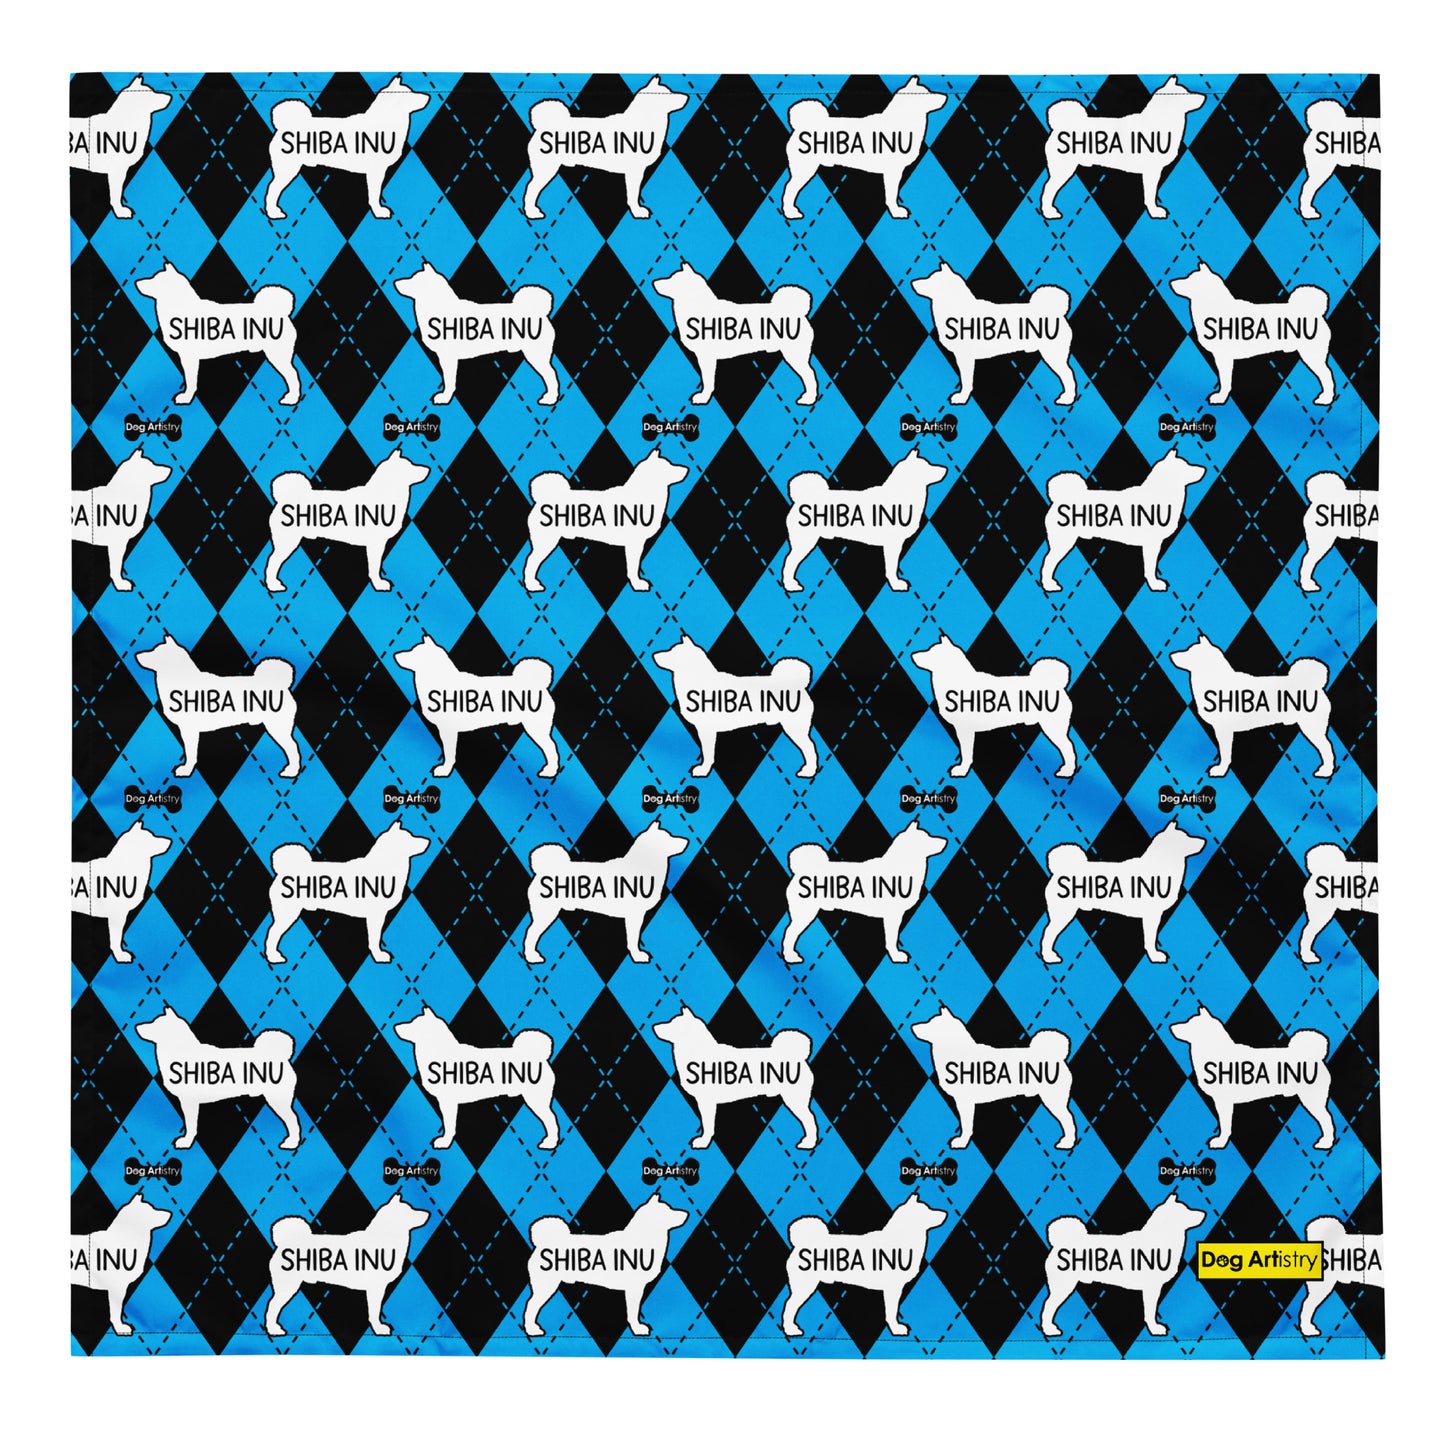 Shiba Inu Blue and Black All-over print bandana